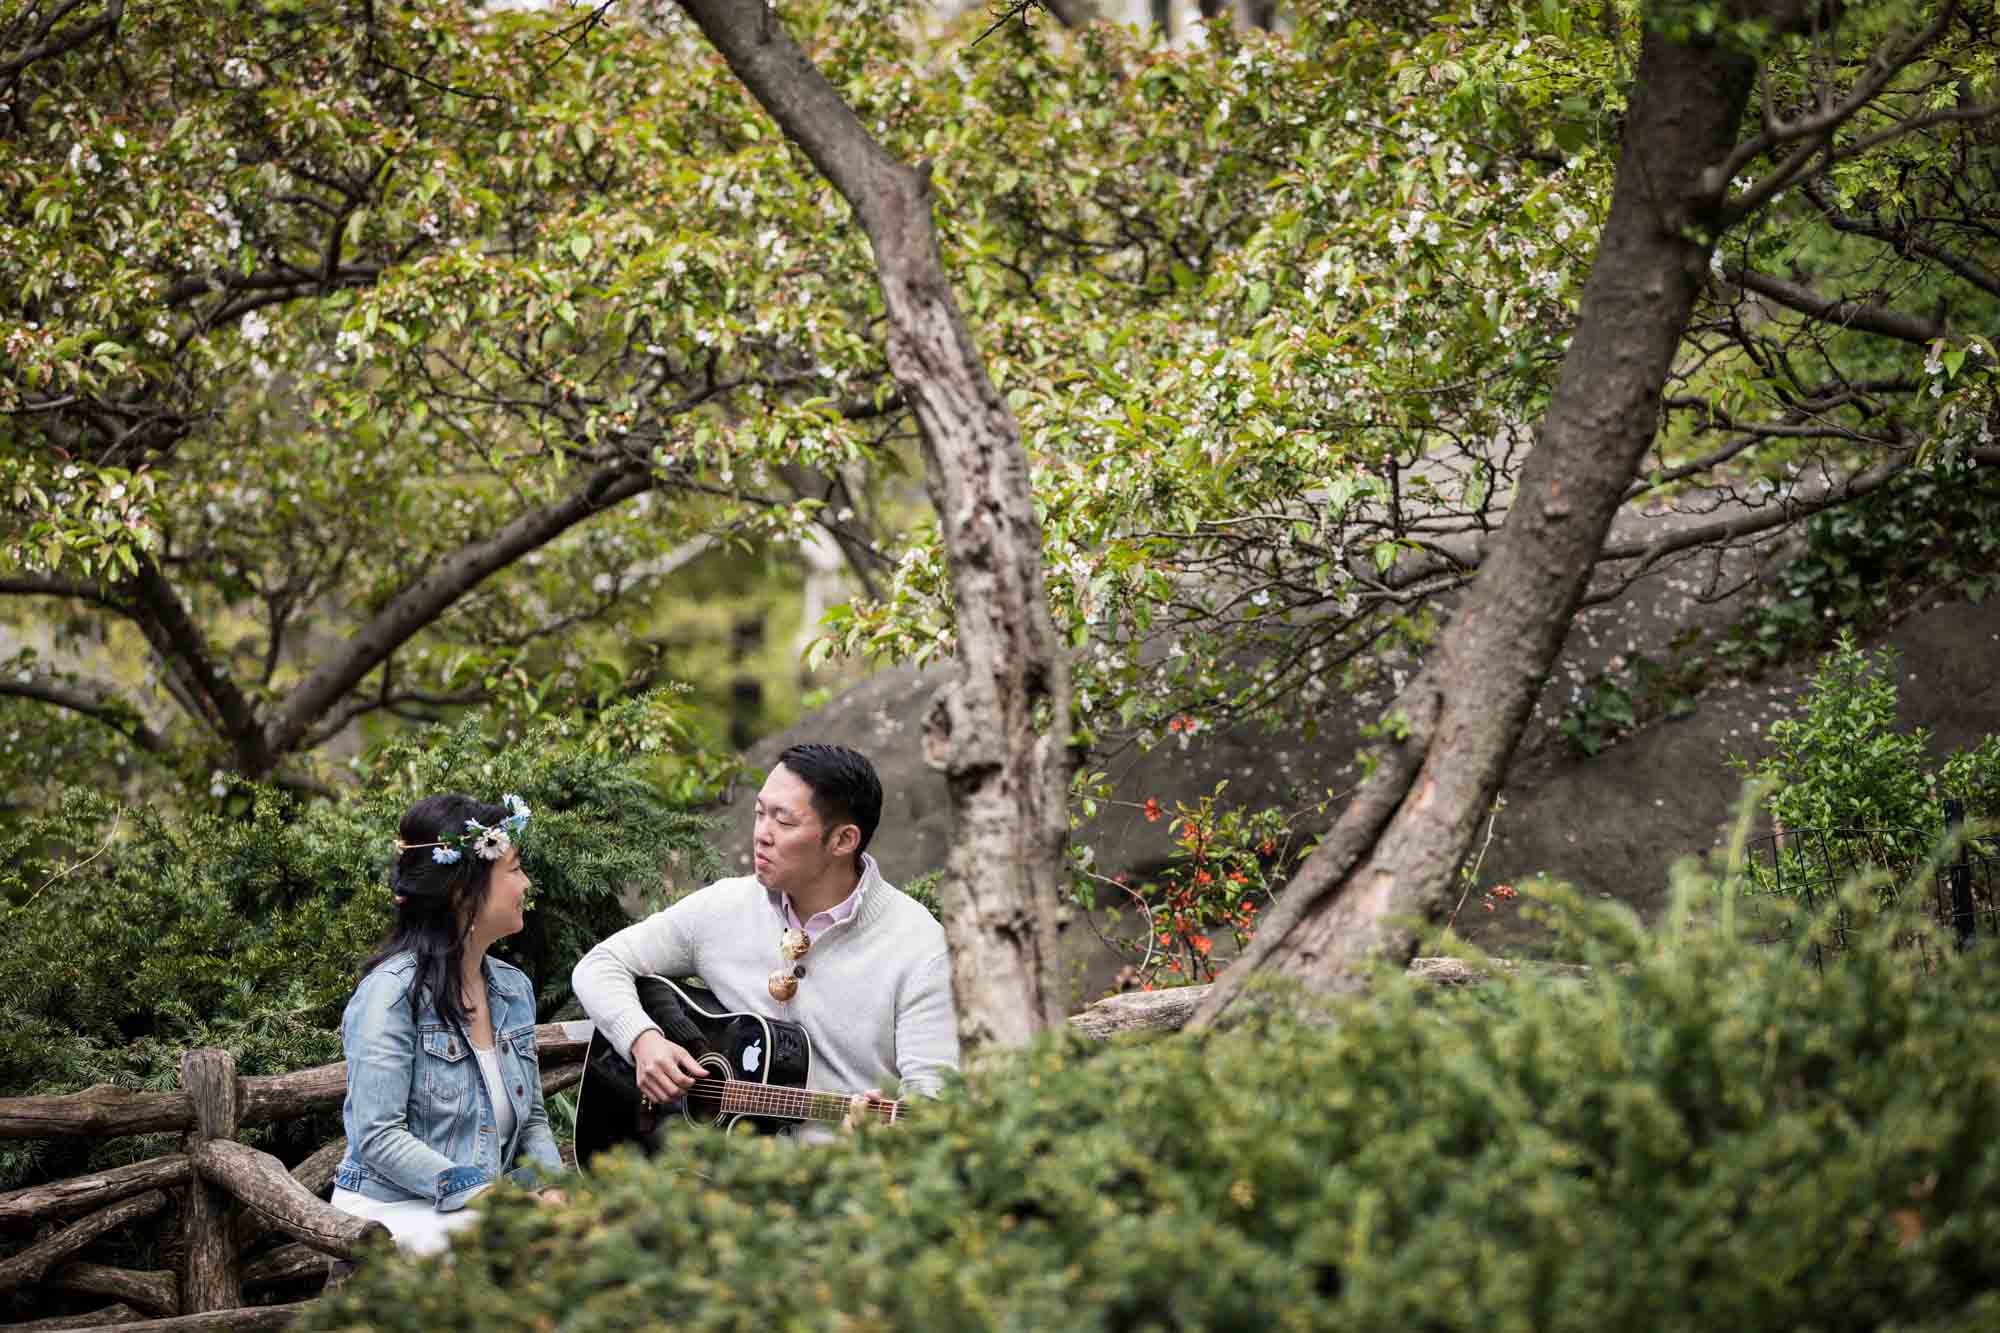 Shakespeare Garden engagement photos of a couple playing guitar in the garden